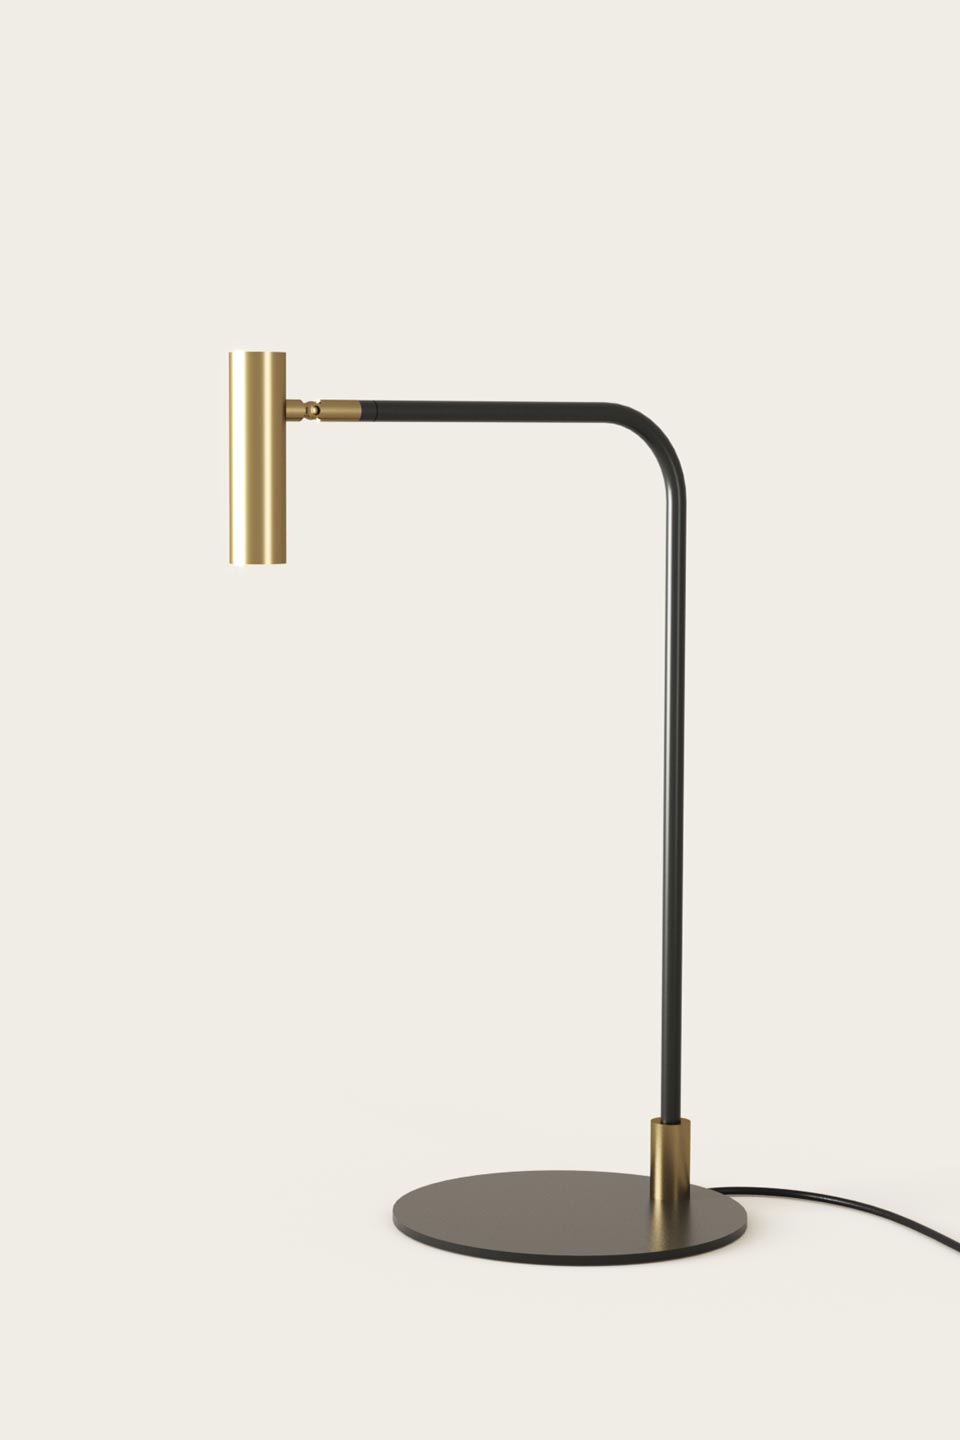 Maho contemporary black and gold desk lamp. Aromas. 